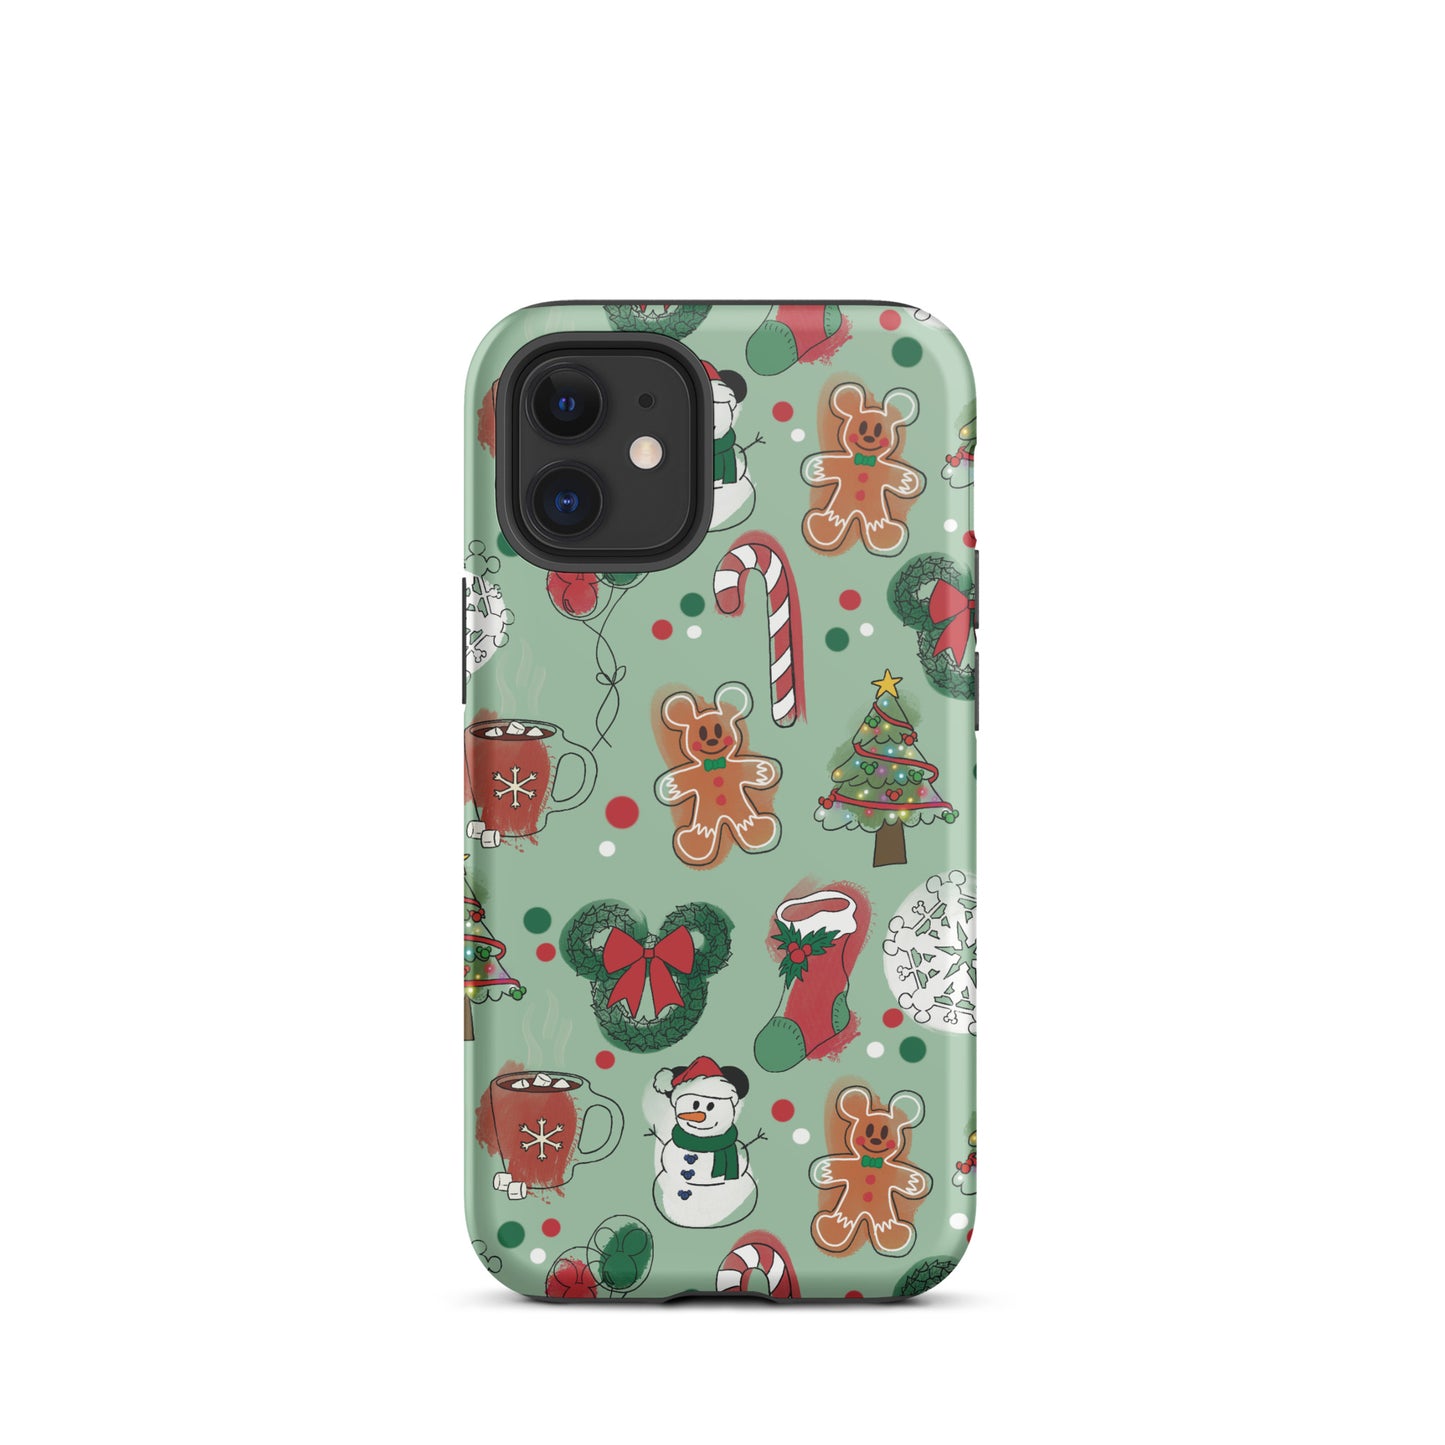 Most Wonderful Iphone Case